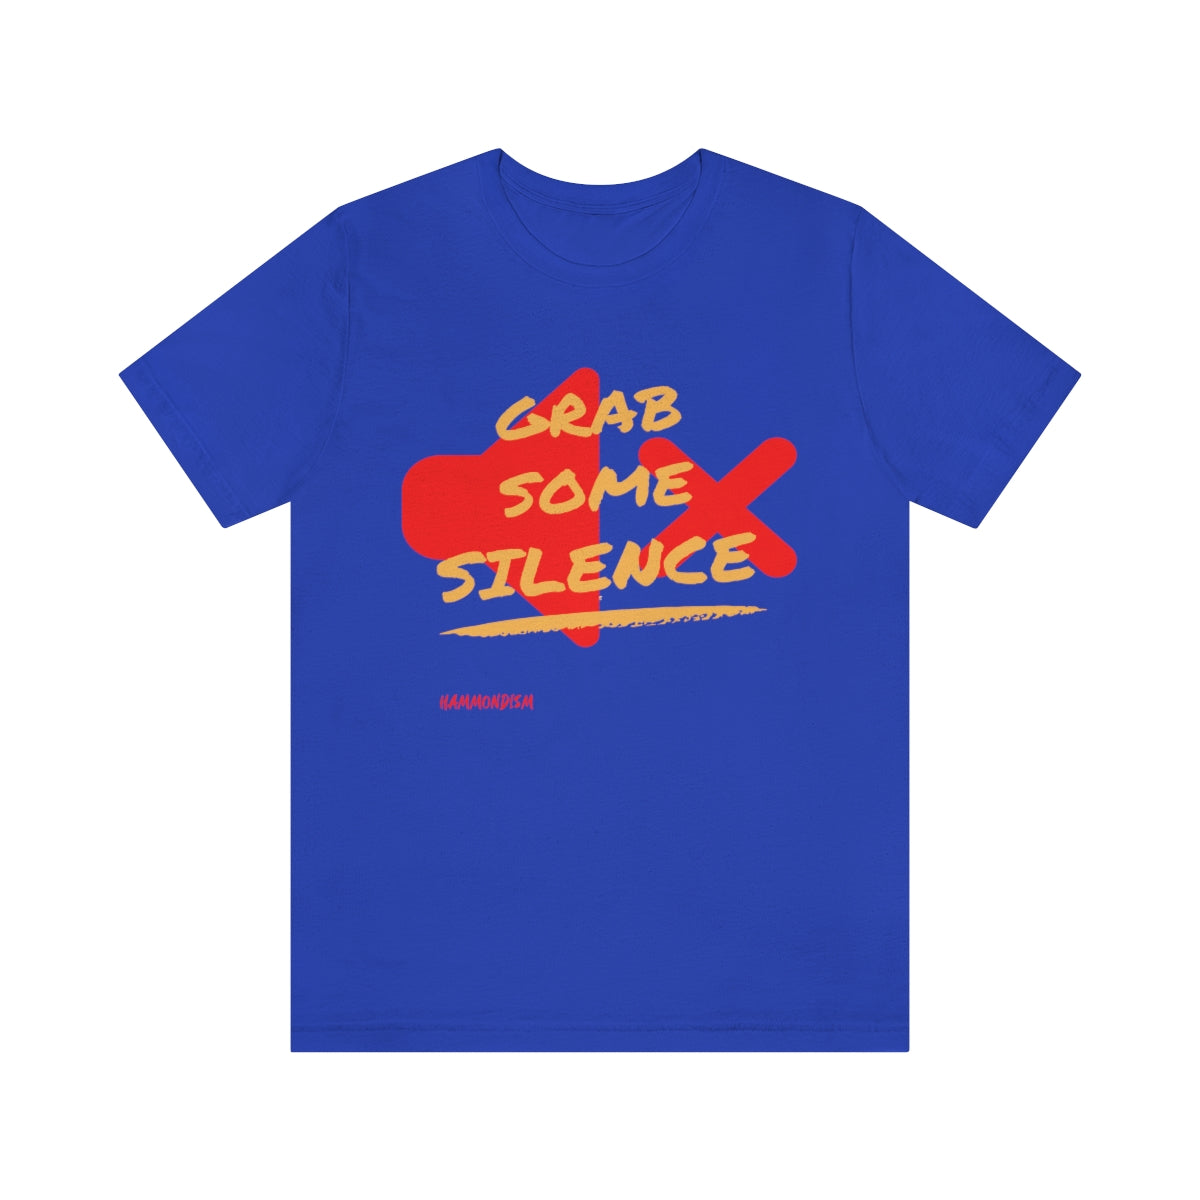 Hammondism Series T-Shirt - Grab Some Silence